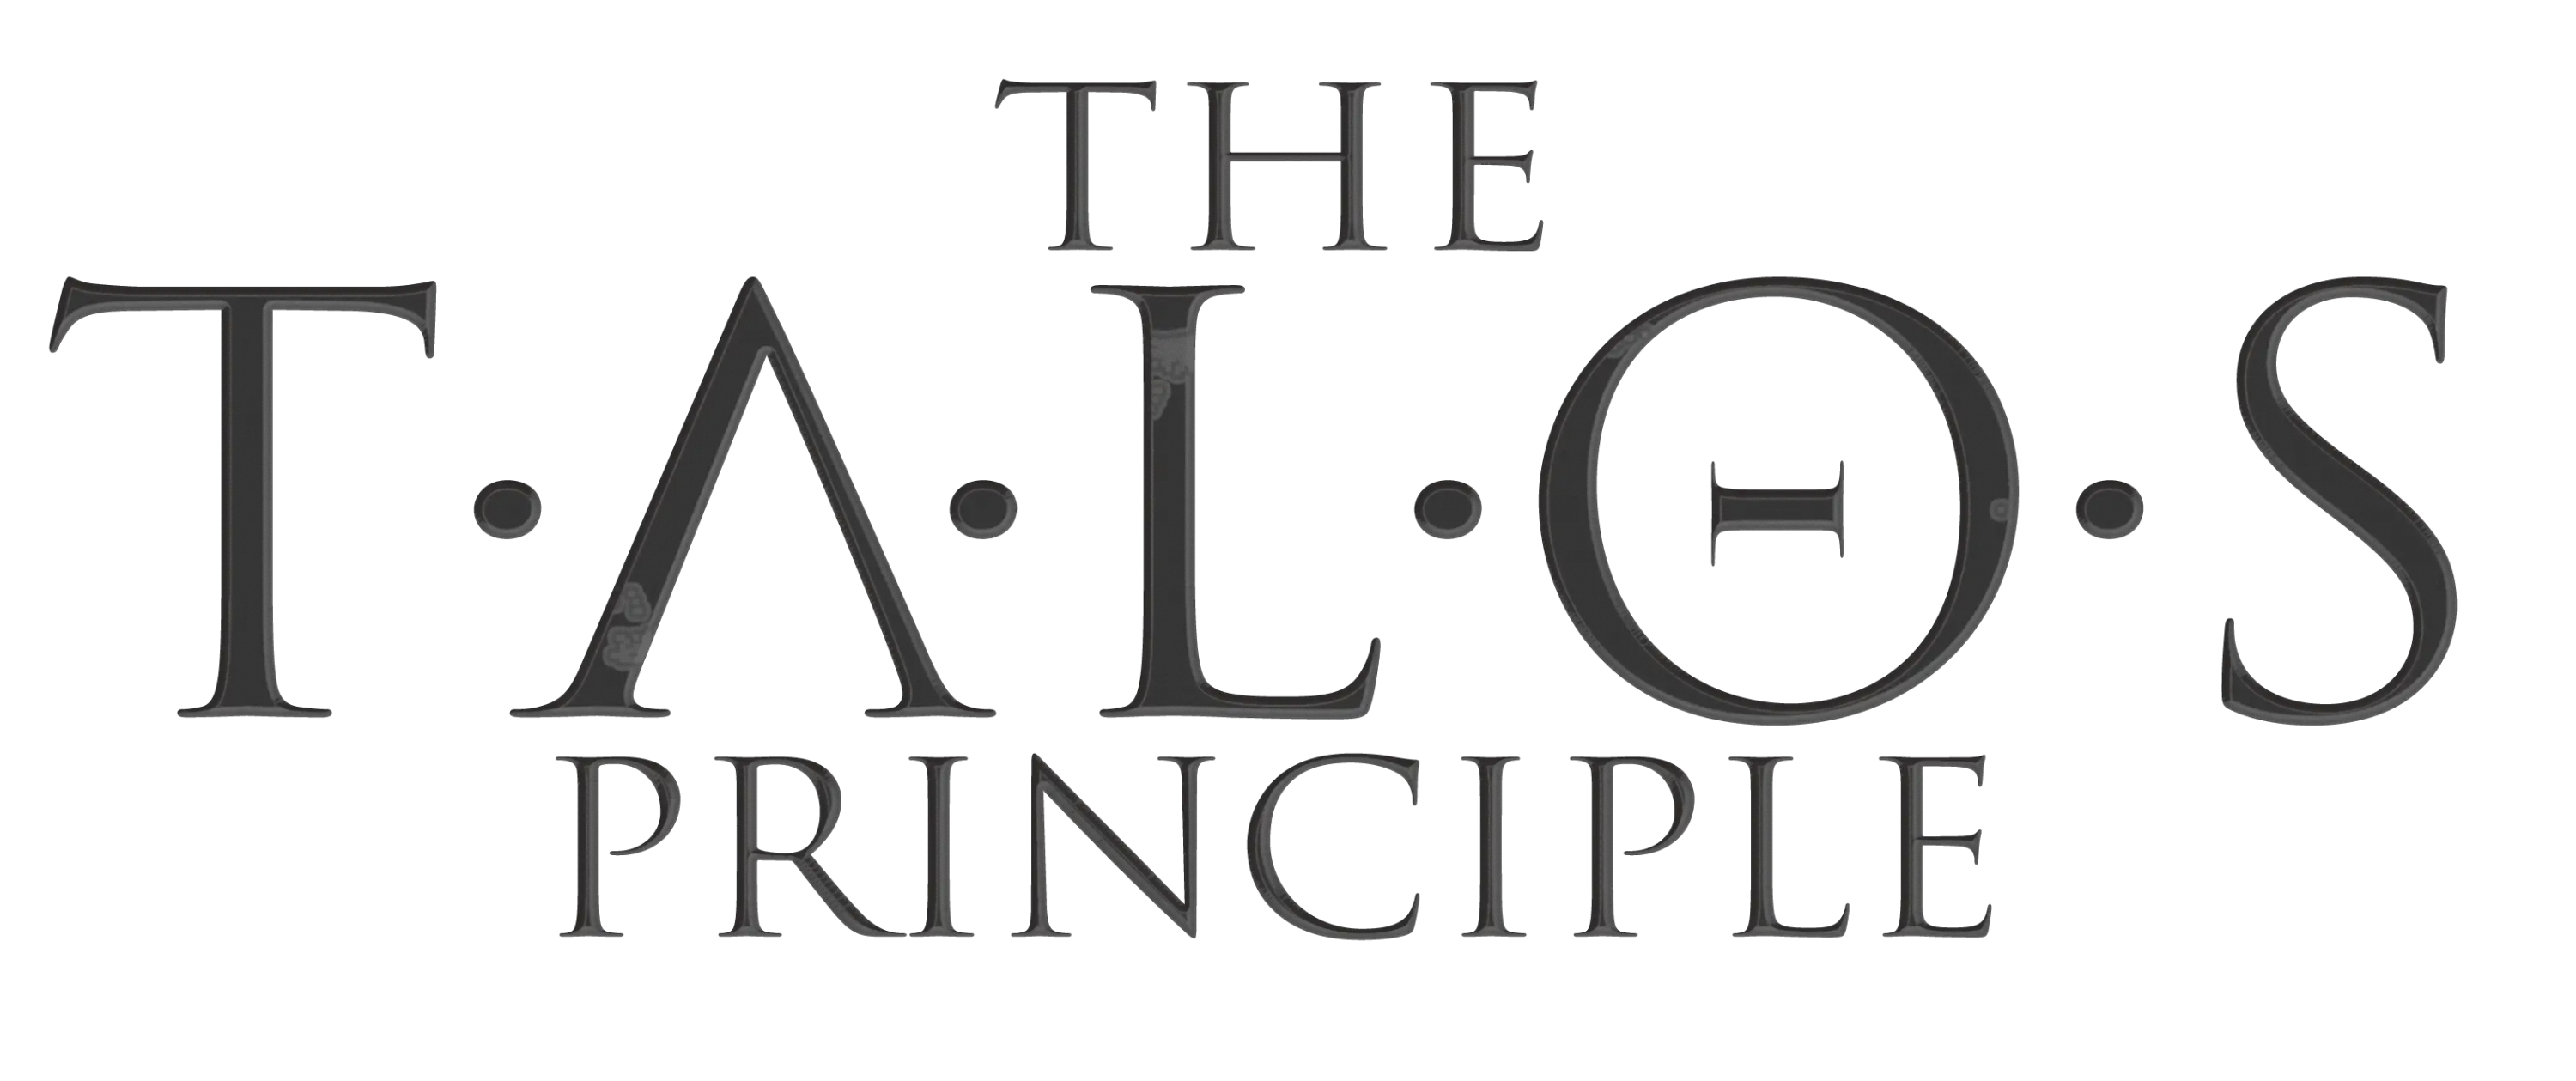 The Talos Principle - Logo Dark